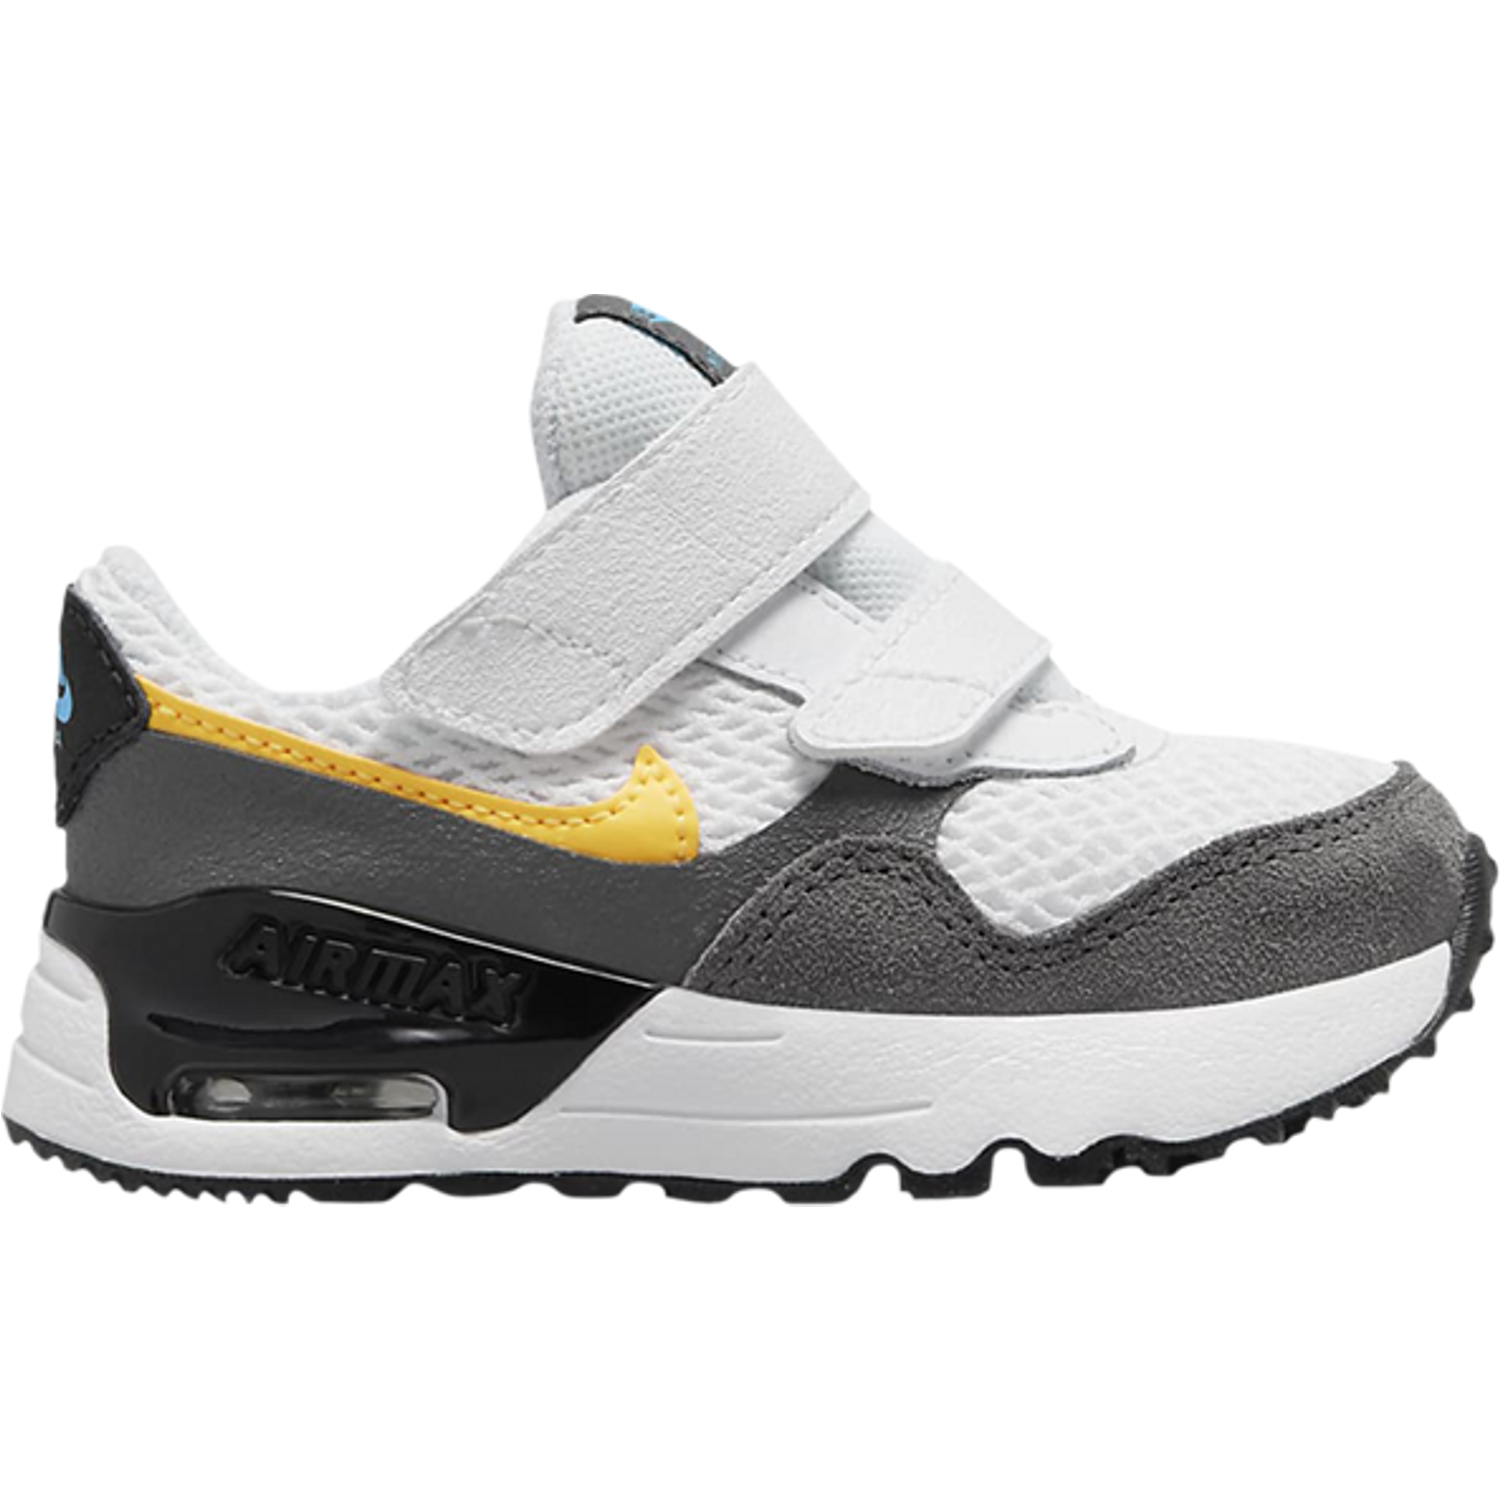 Кроссовки для малышей Nike Air Max Systm TD, бело-серый детские кроссовки nike air max systm ps бело серый